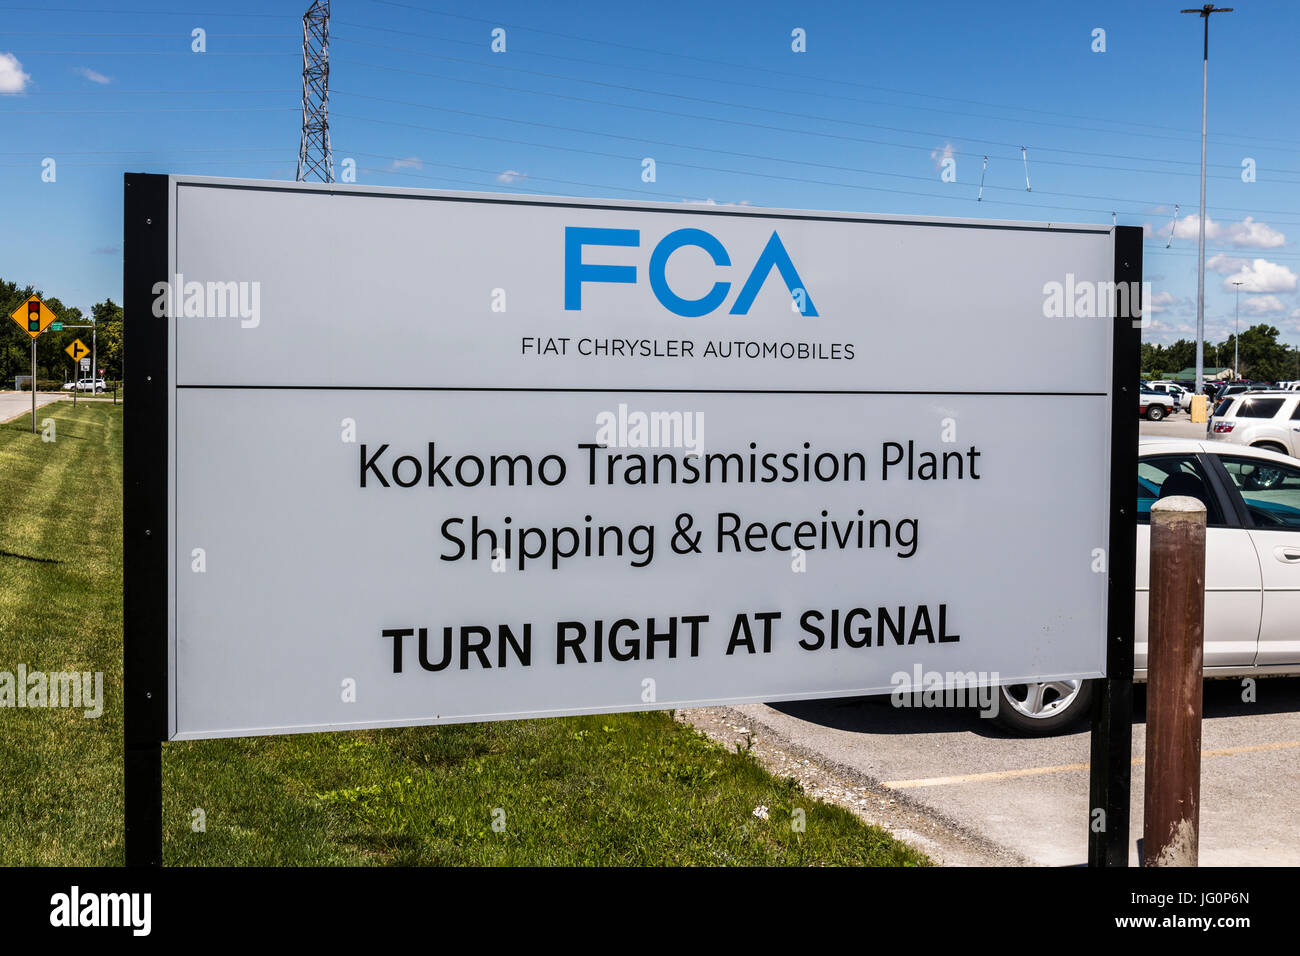 Kokomo - Circa June 2017: FCA Fiat Chrysler Automobiles Transmission Plant. FCA sells vehicles under the Chrysler, Dodge, and Jeep brands X Stock Photo